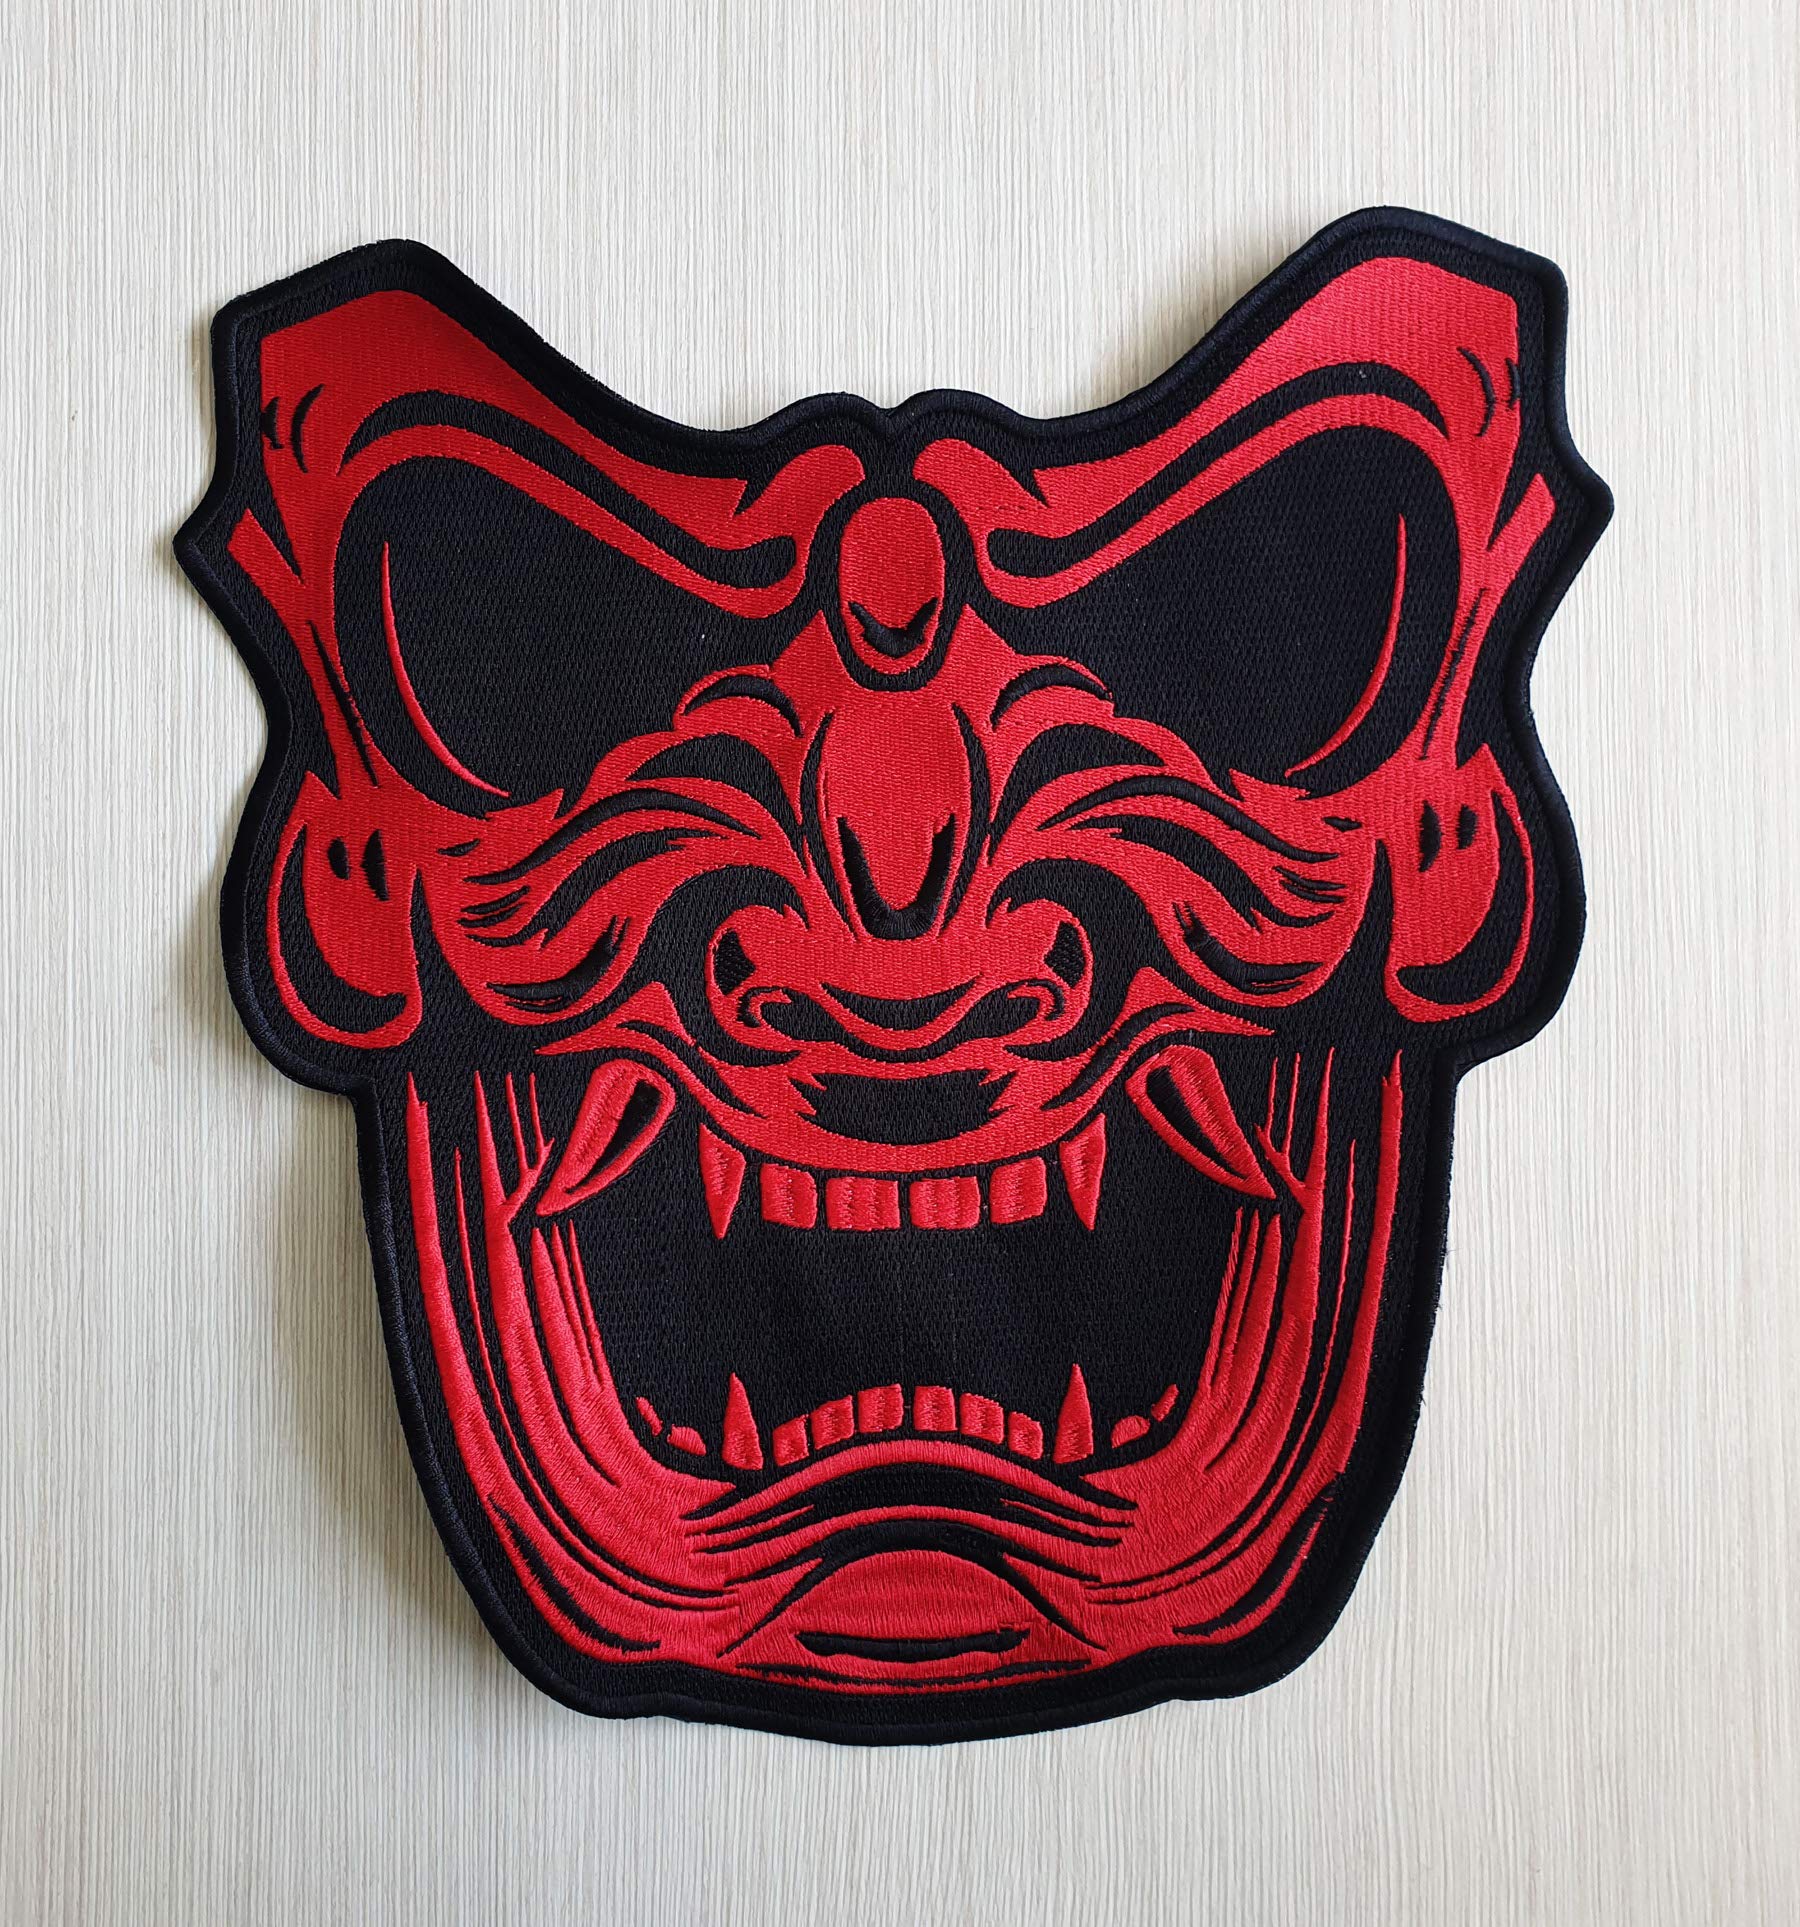 Aufnäher Samurai Mask Ninja Warrior Martial Arts Patch, große Größe Stickerei Iron on Jacket Back Patch Motorrad Patch Urban Art Patch (Rot)